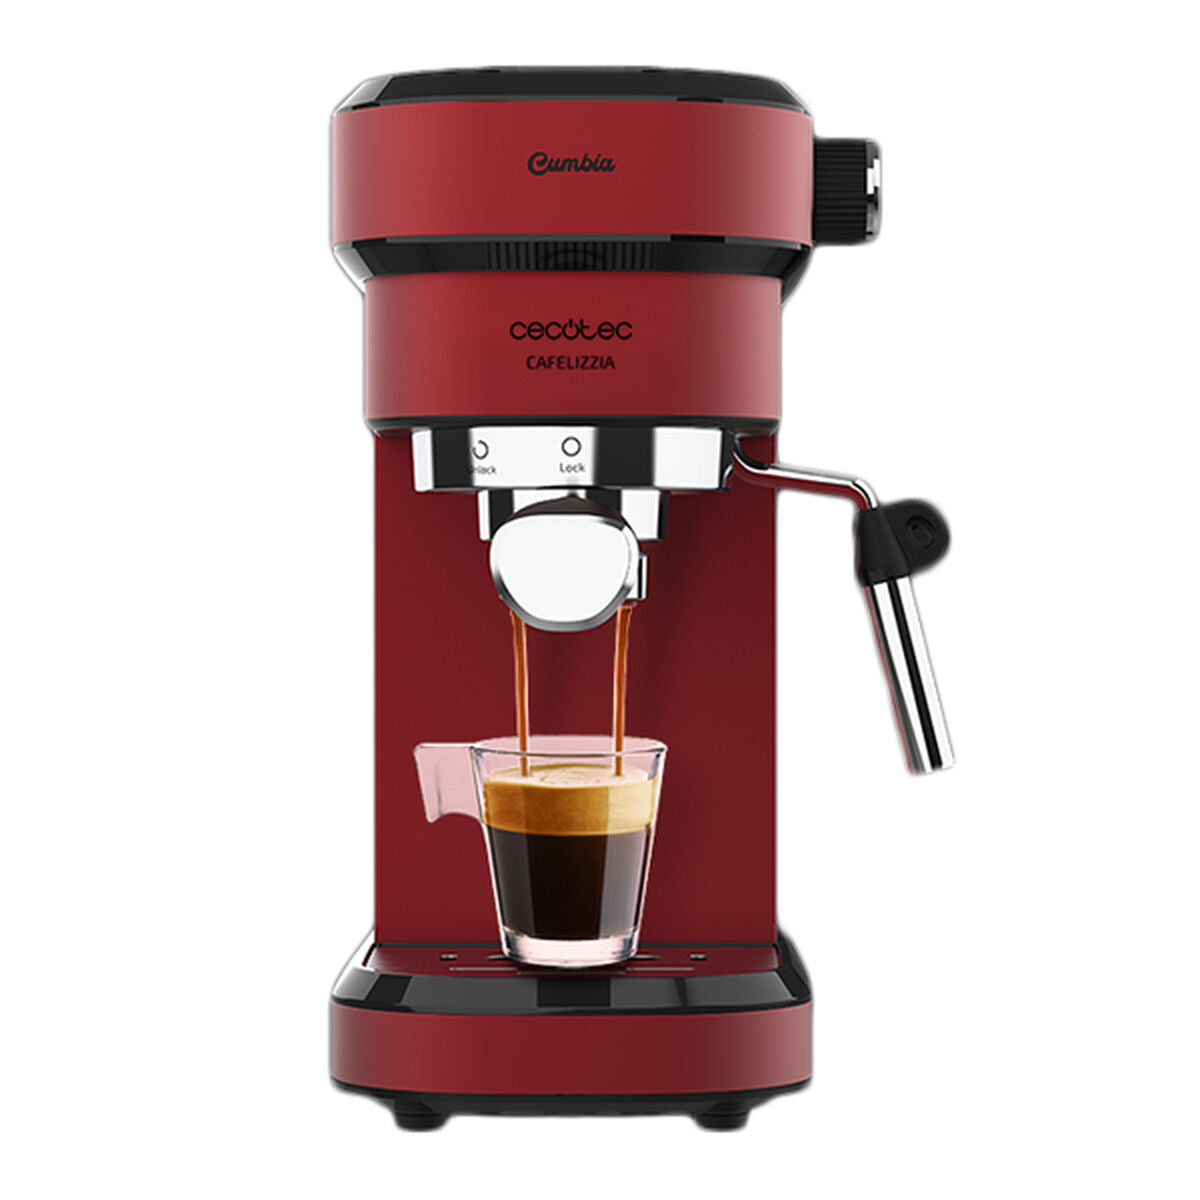 Máquina de café manual expressa Cecotec cafelizzia 790 brilhante 1,2 L 20